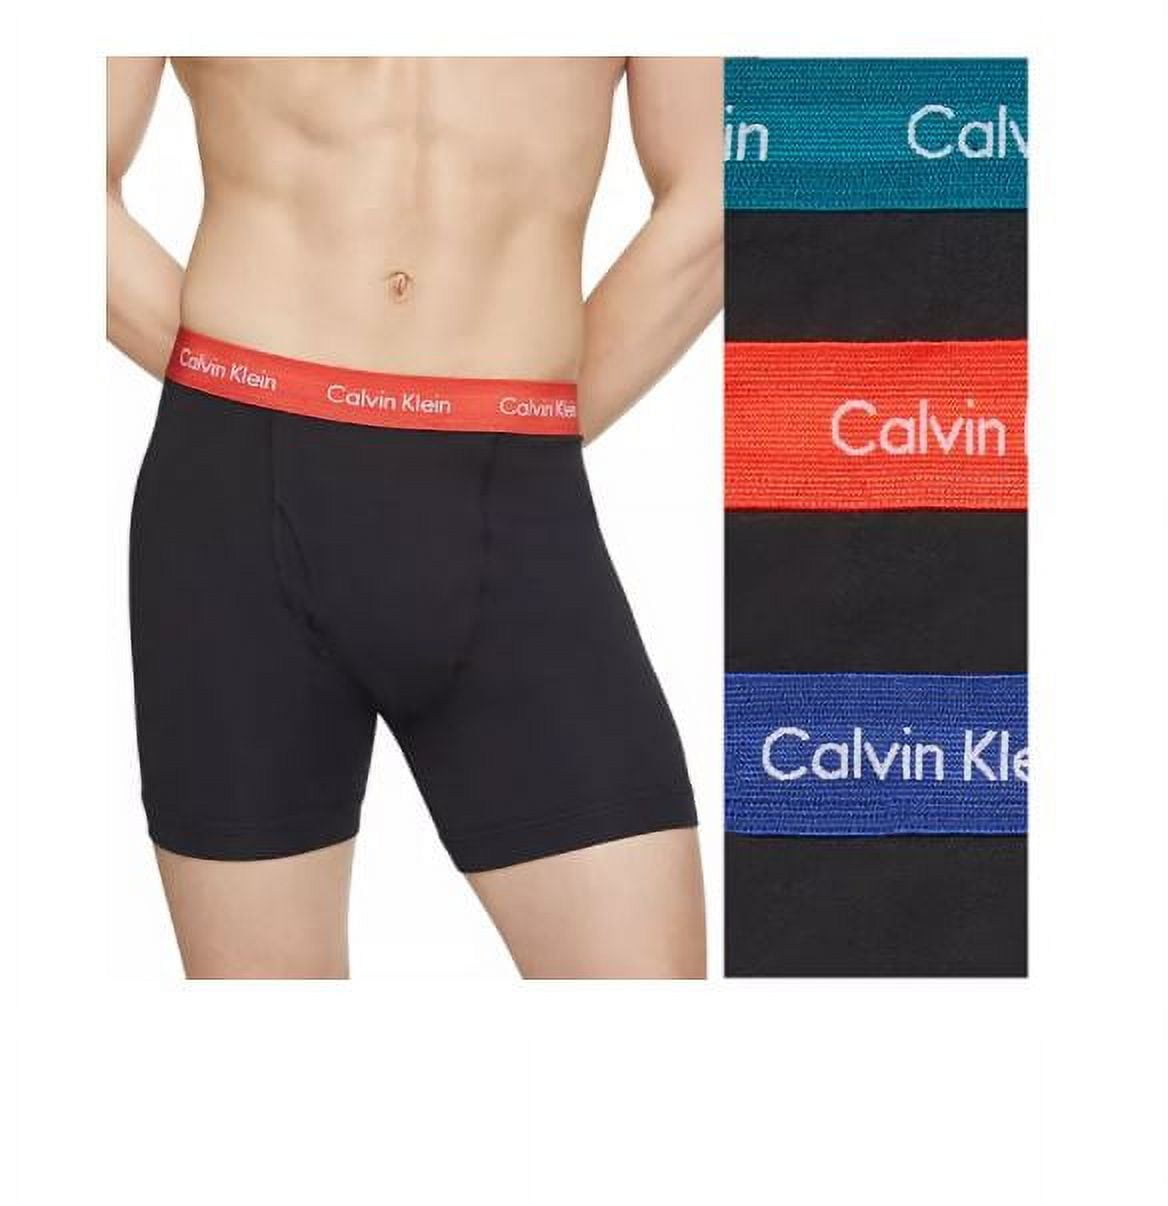 Calvin Klein Cotton Stretch Boxer Brief Wicking Technology 3-PACK